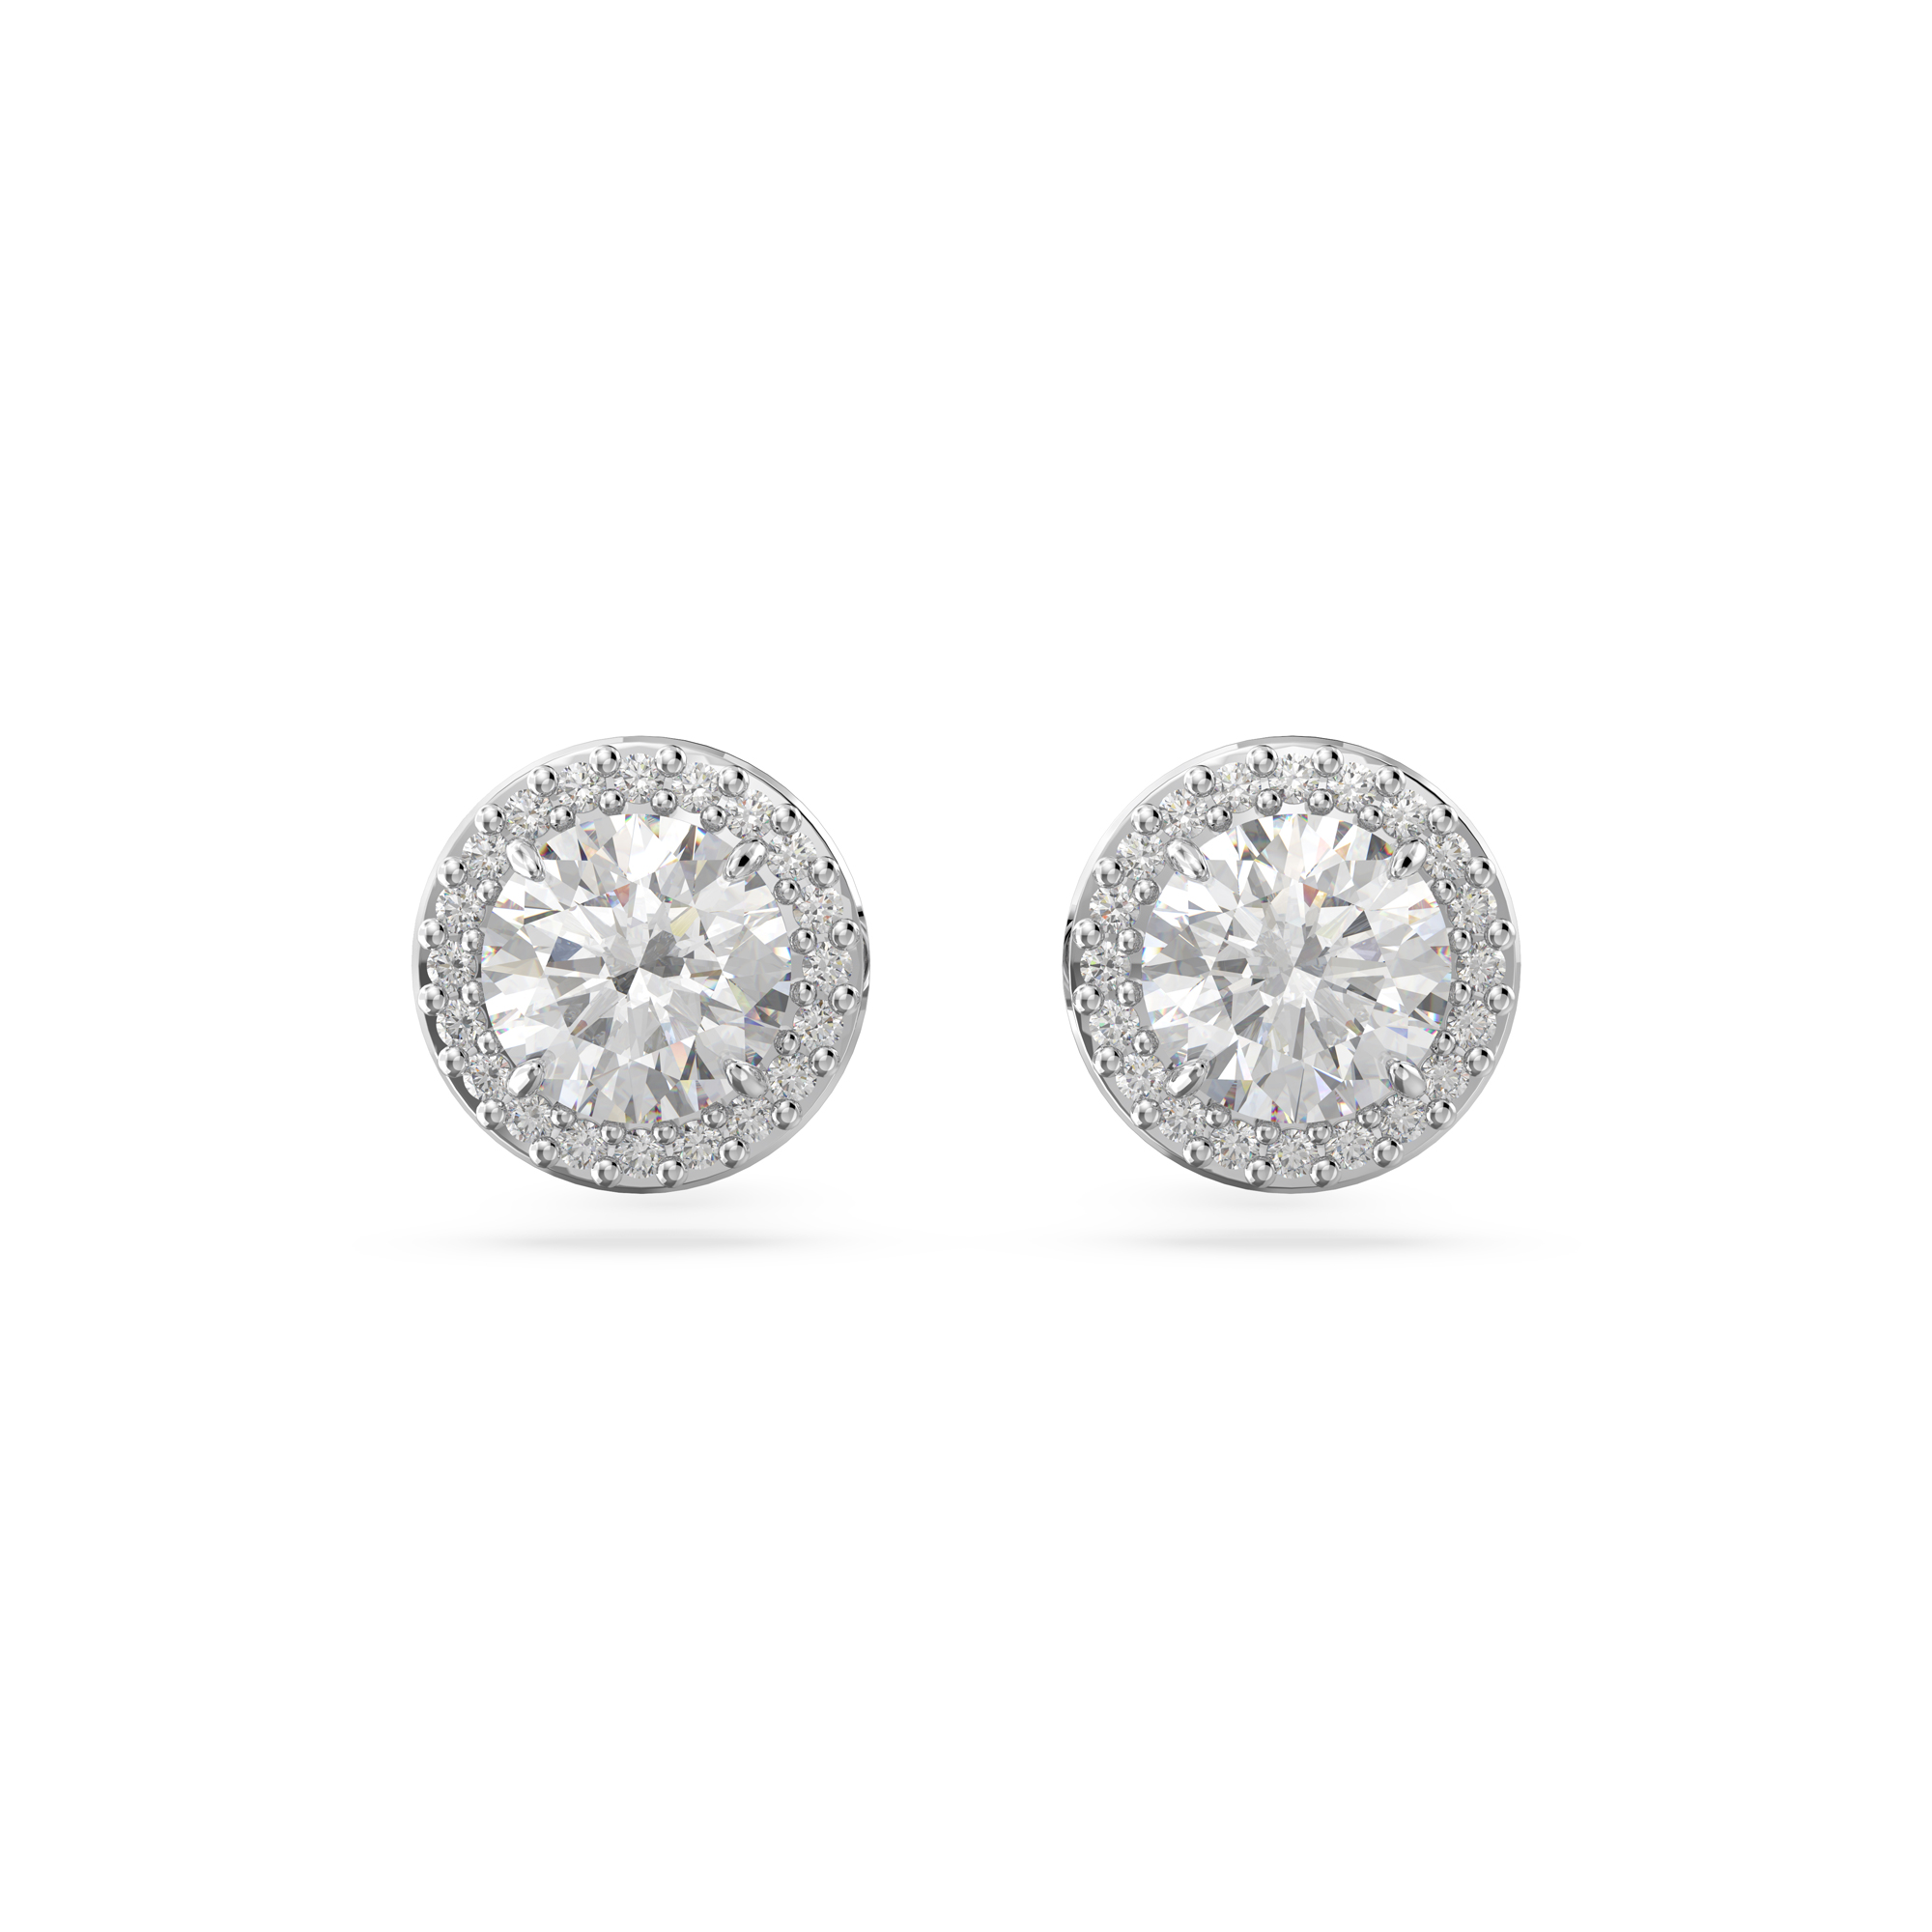 Swarovski Crystal and Zirconia Constella Rhodium-Plated Halo Stud Earrings, Large